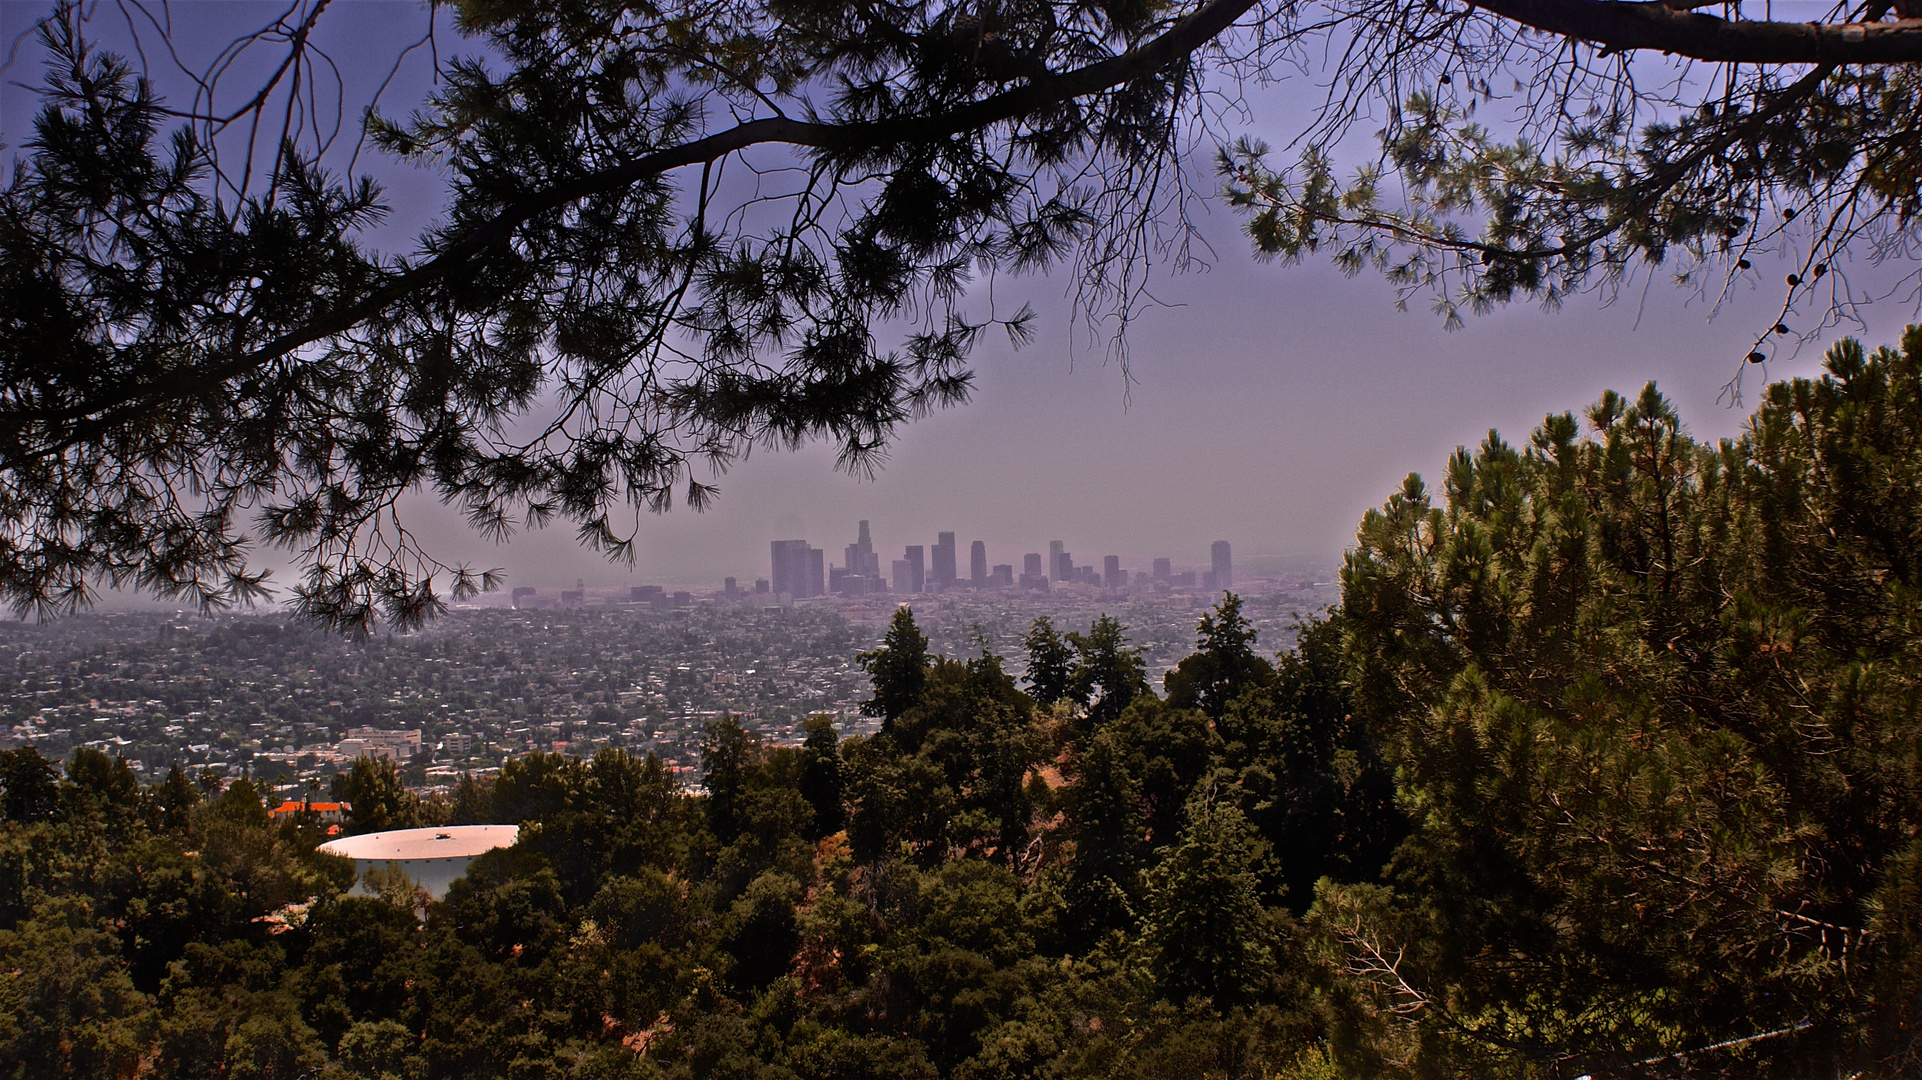 Blick auf Los Angeles